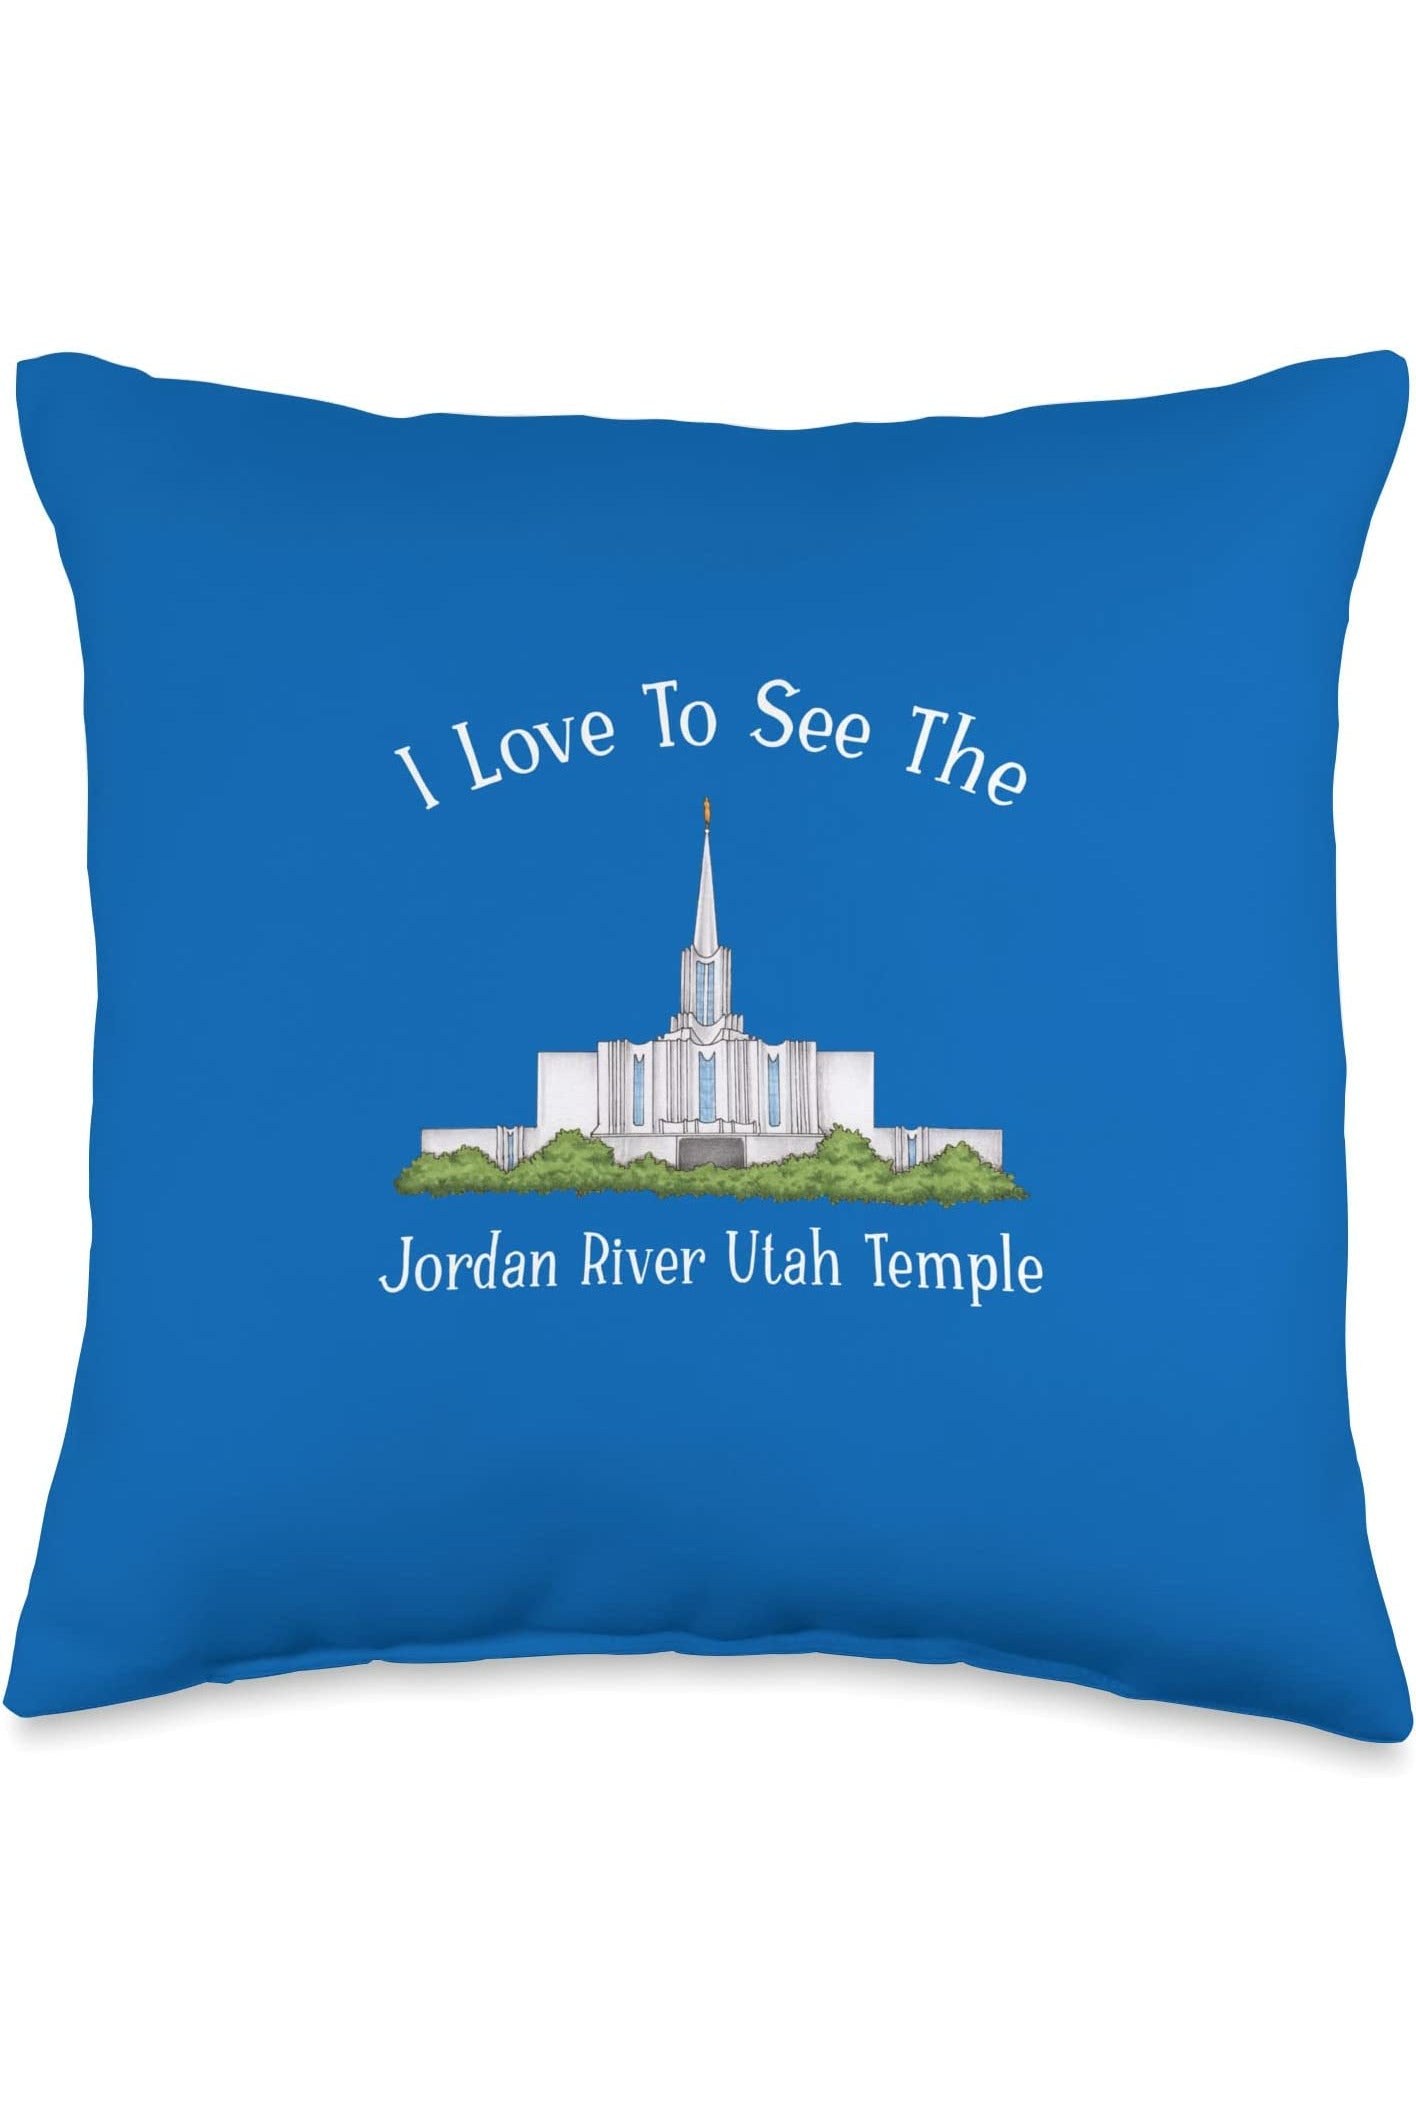 Jordan River Utah Temple Throw Pillows - Happy Style (English) US